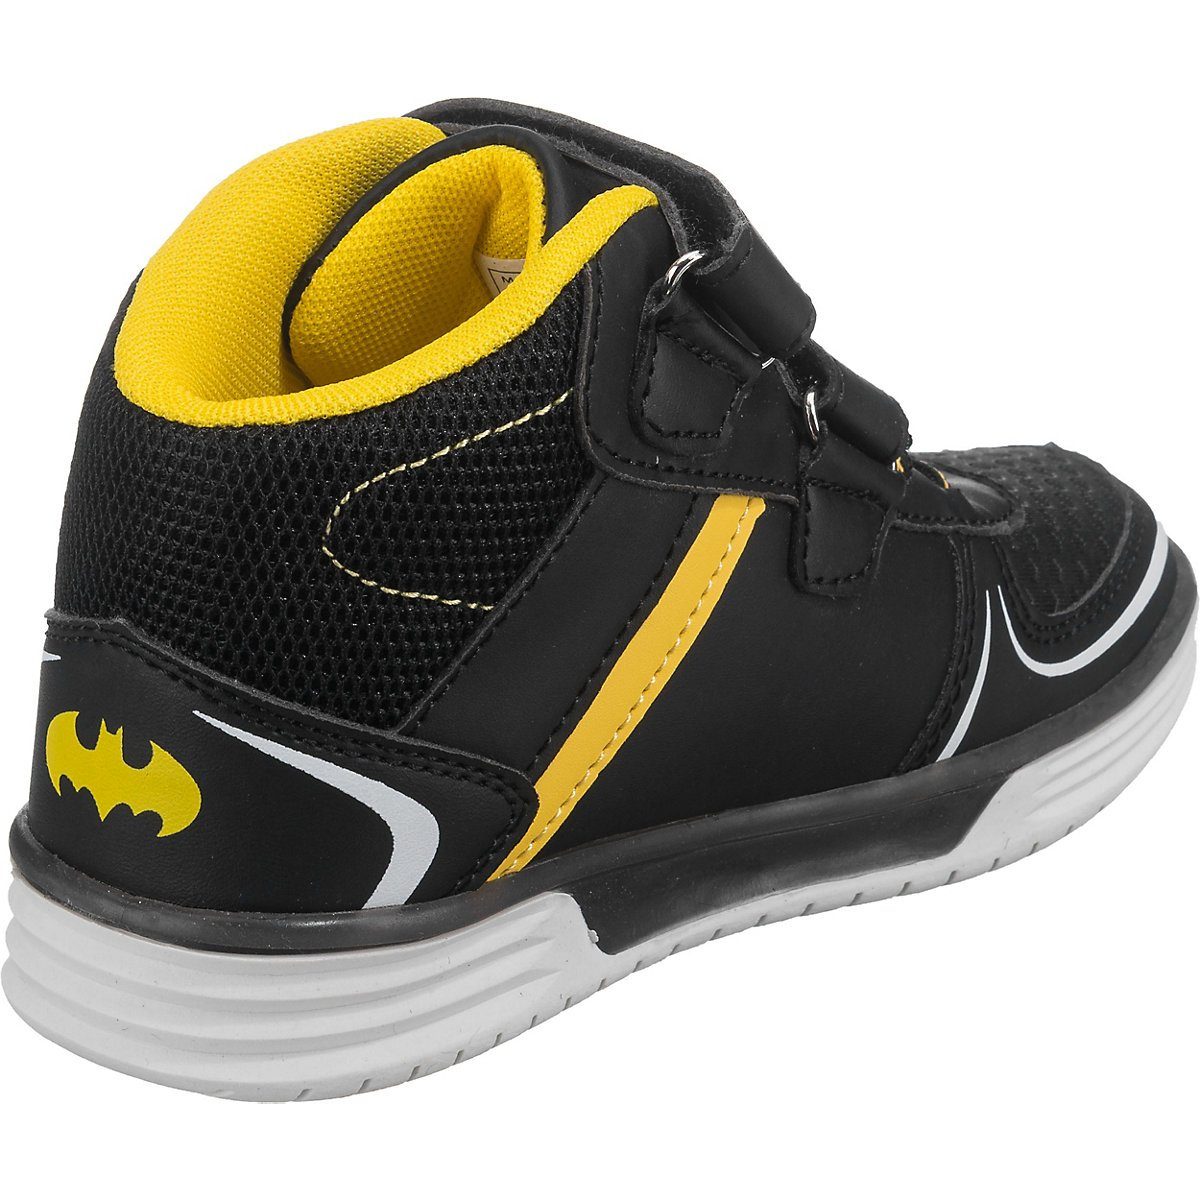 Schuhe Alle Sneaker Batman Batman Sneakers High Blinkies für Jungen Sneaker